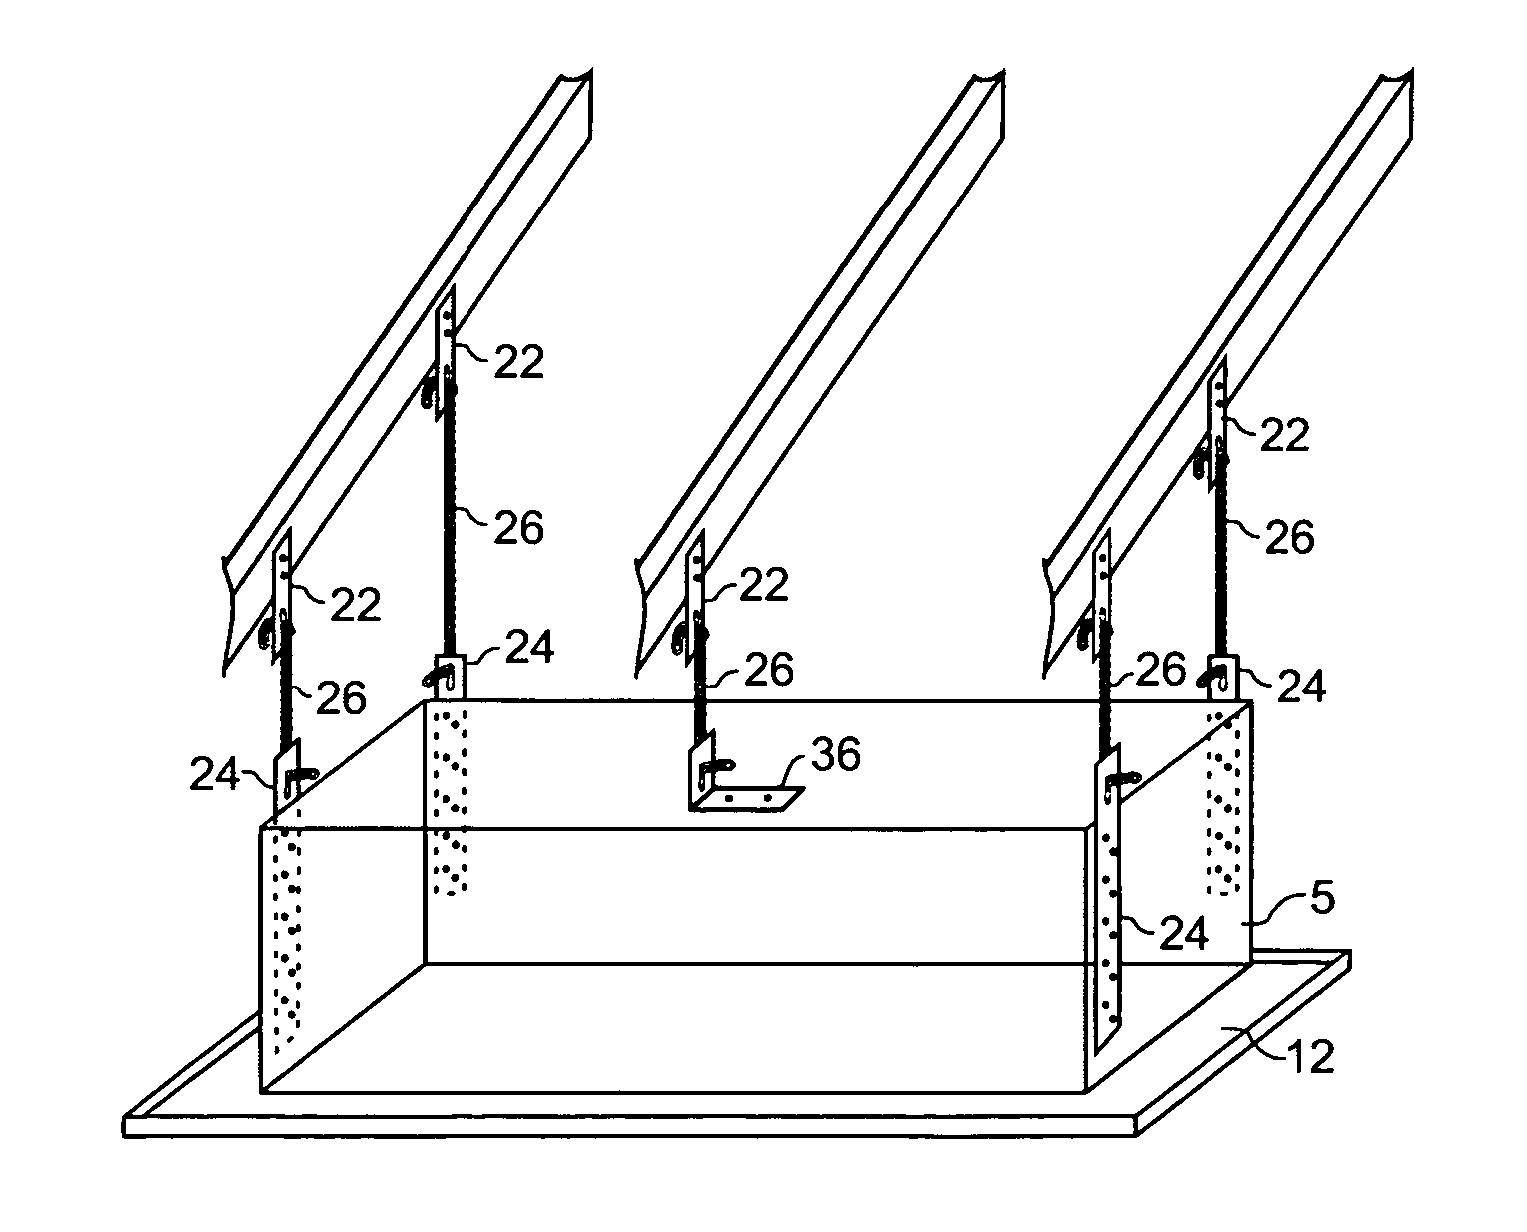 Suspension system for HVAC Equipment